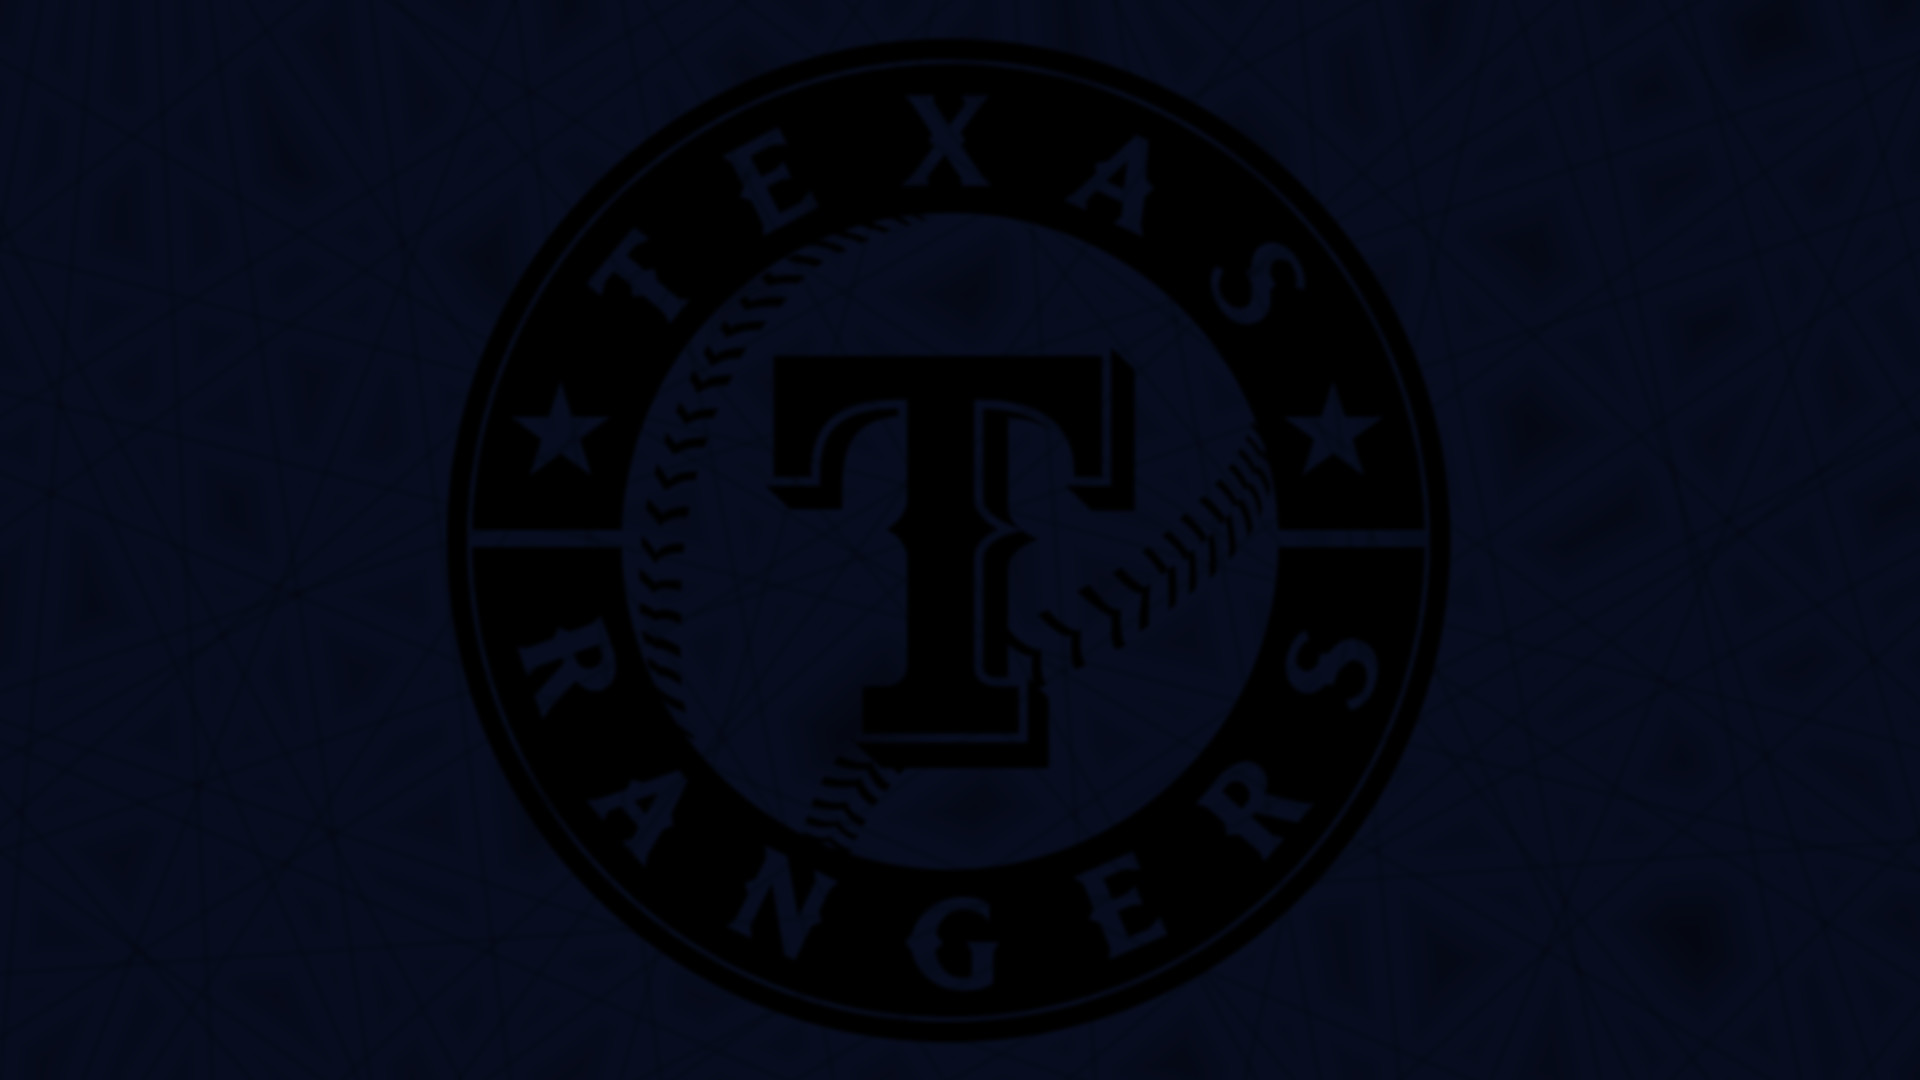 1920x1080 Texas Ranger Wallpaper images